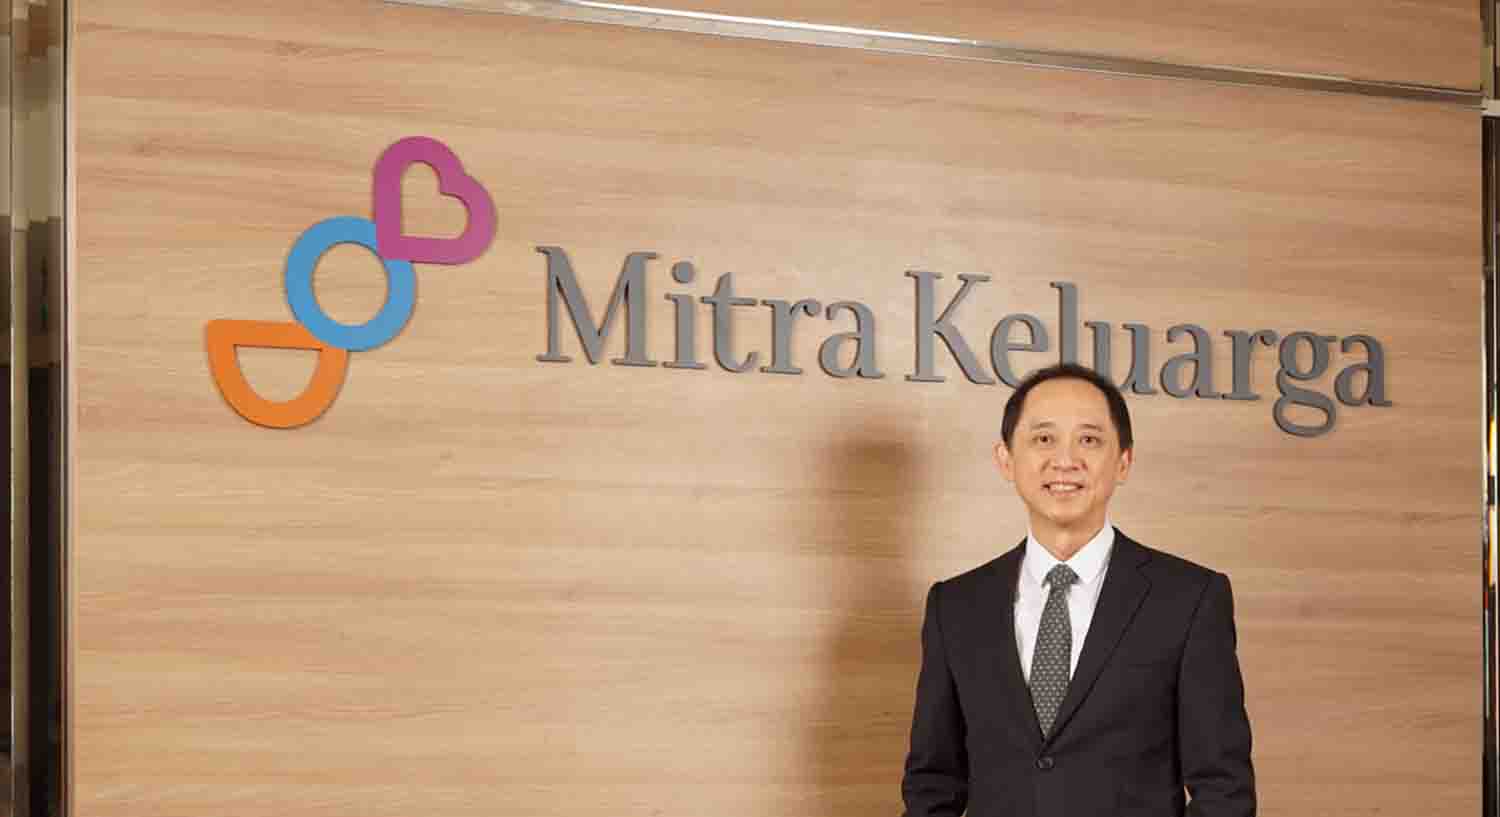 Rustiyan Oen, CEO PT Mitra Keluarga Karyasehat Tbk. Membangun Kepercayaan untuk Pertahankan Kinerja